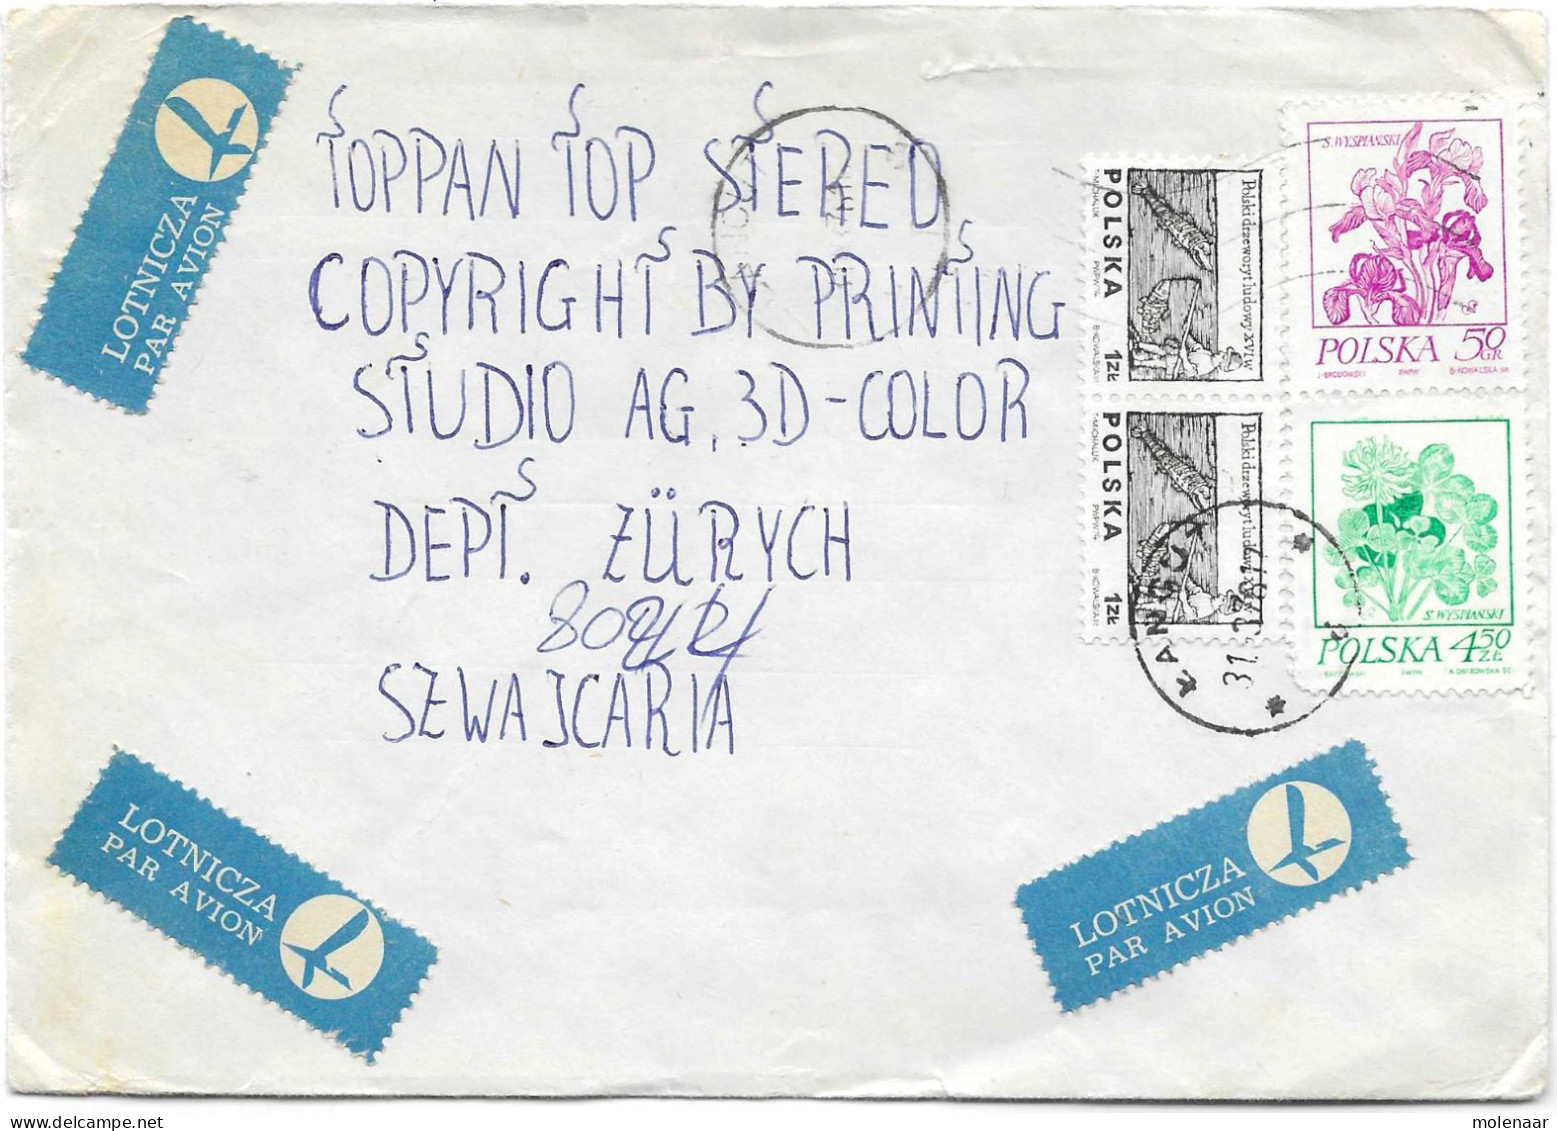 Postzegels > Europa > Polen > 1944-.... Republiek > 1971-80 > Brief Met 4 Postzegels (17132) - Cartas & Documentos